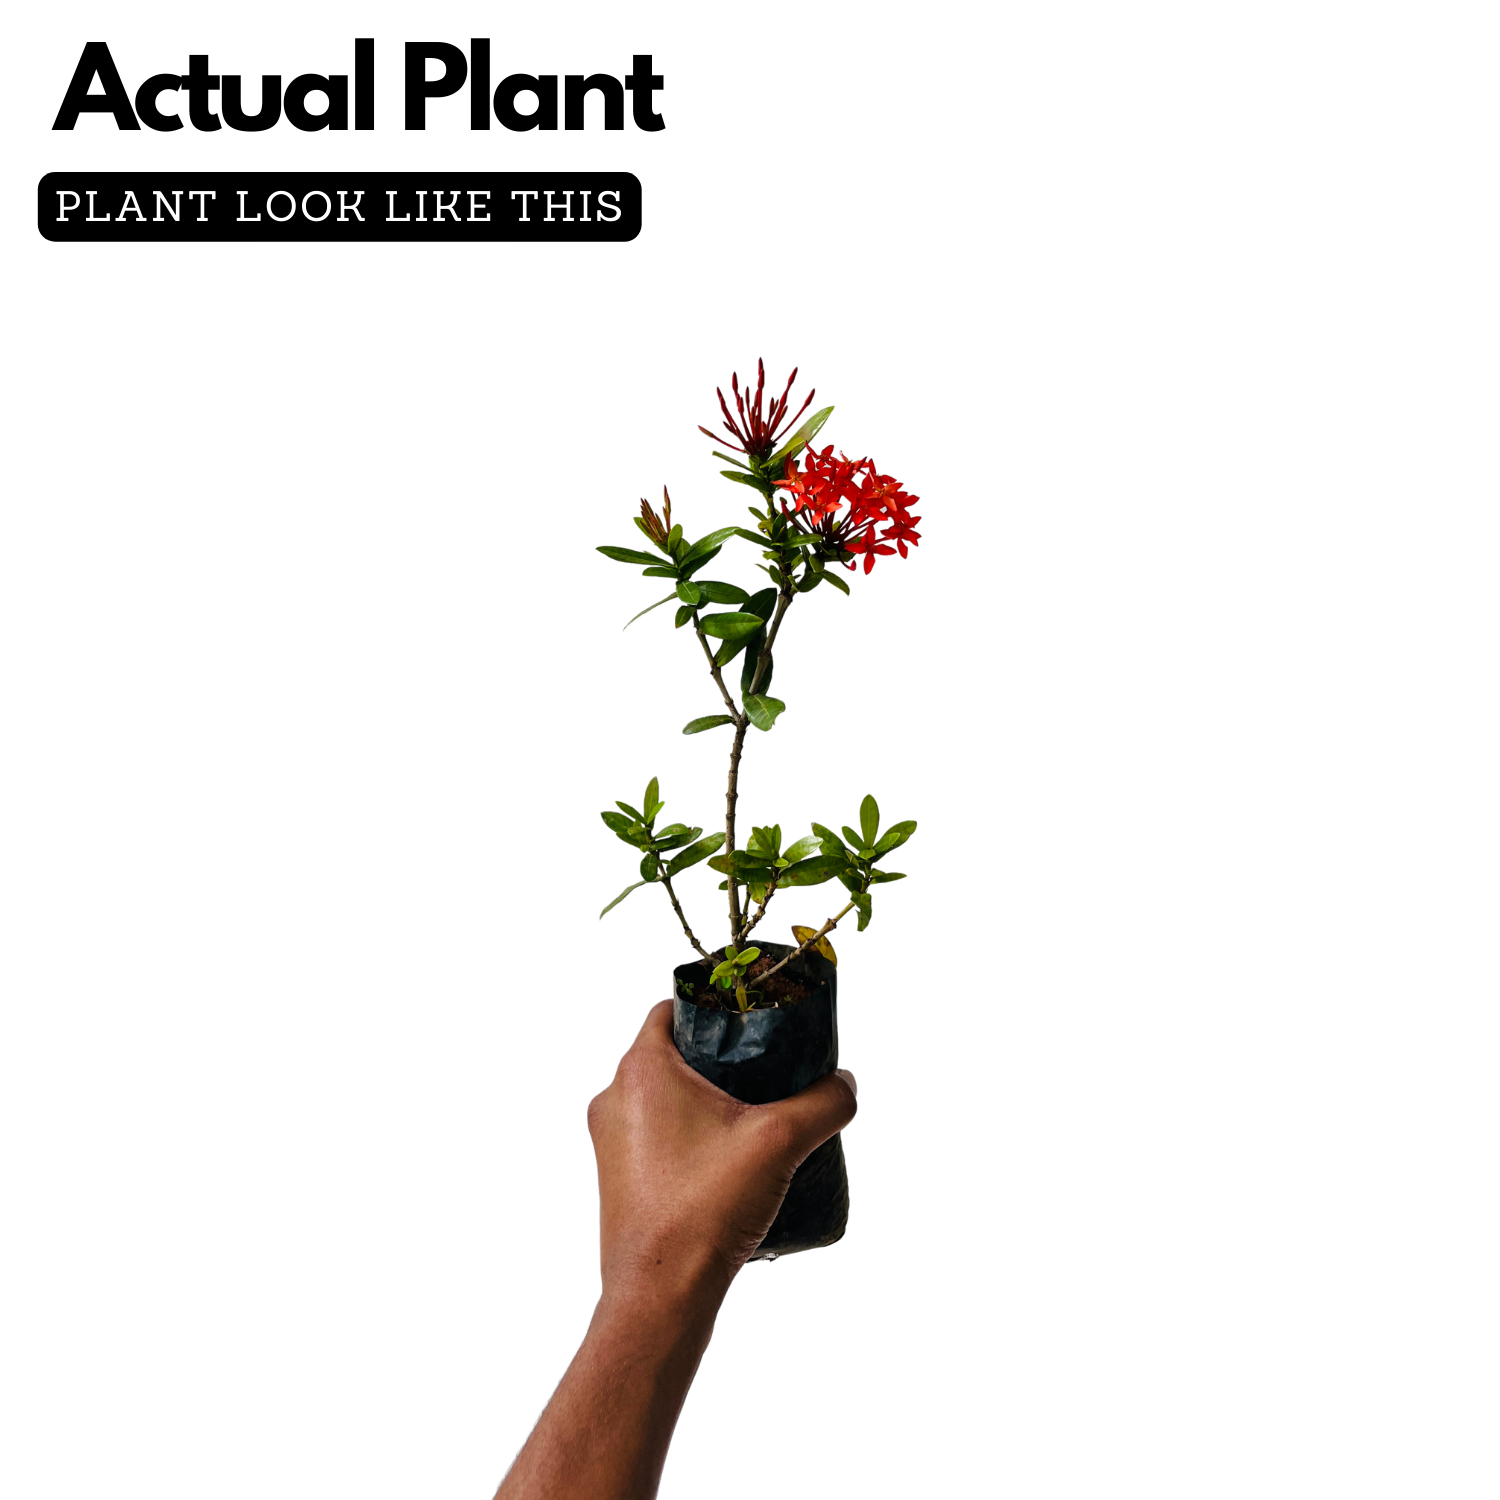 Red Ixora / Chuvanna Chethi (Ixora coccinea) Flowering/Ornamental Live Plant (Home & Garden)